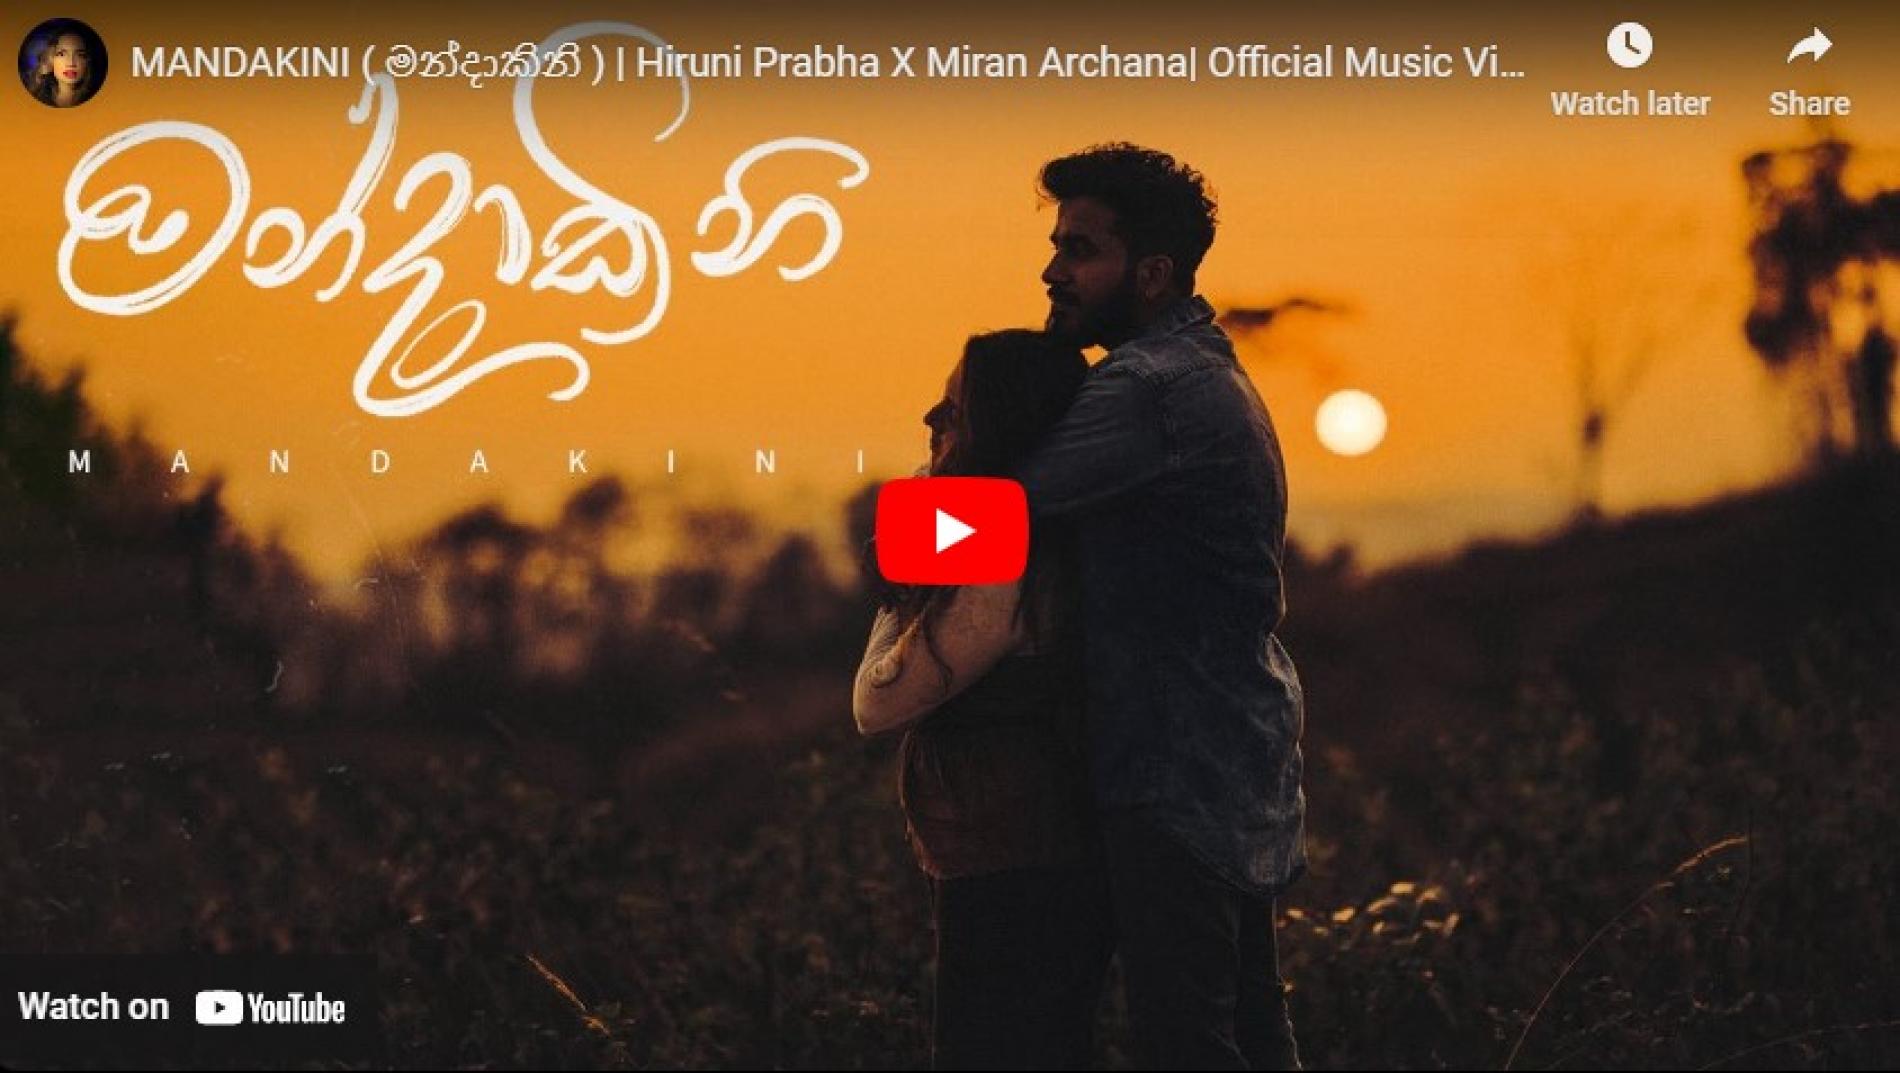 New Music : Mandakini (මන්දාකිනි) | Hiruni Prabha X Miran Archana| Official Music Video